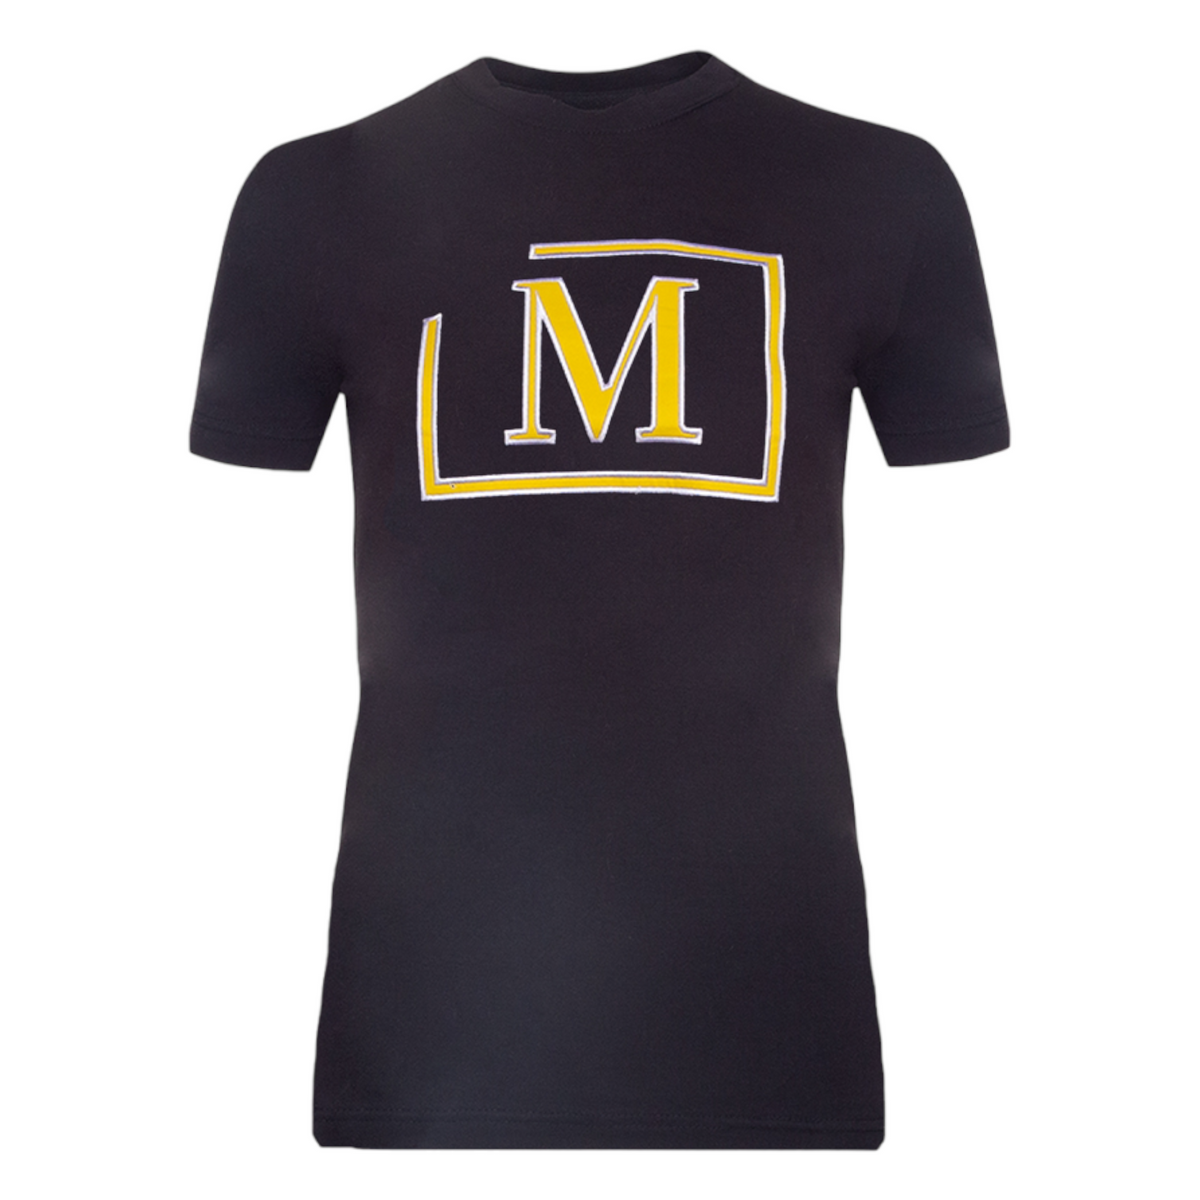 MDB Brand Women's Classic M Embroidered Logo Tee - Black w/ White Outline Logo